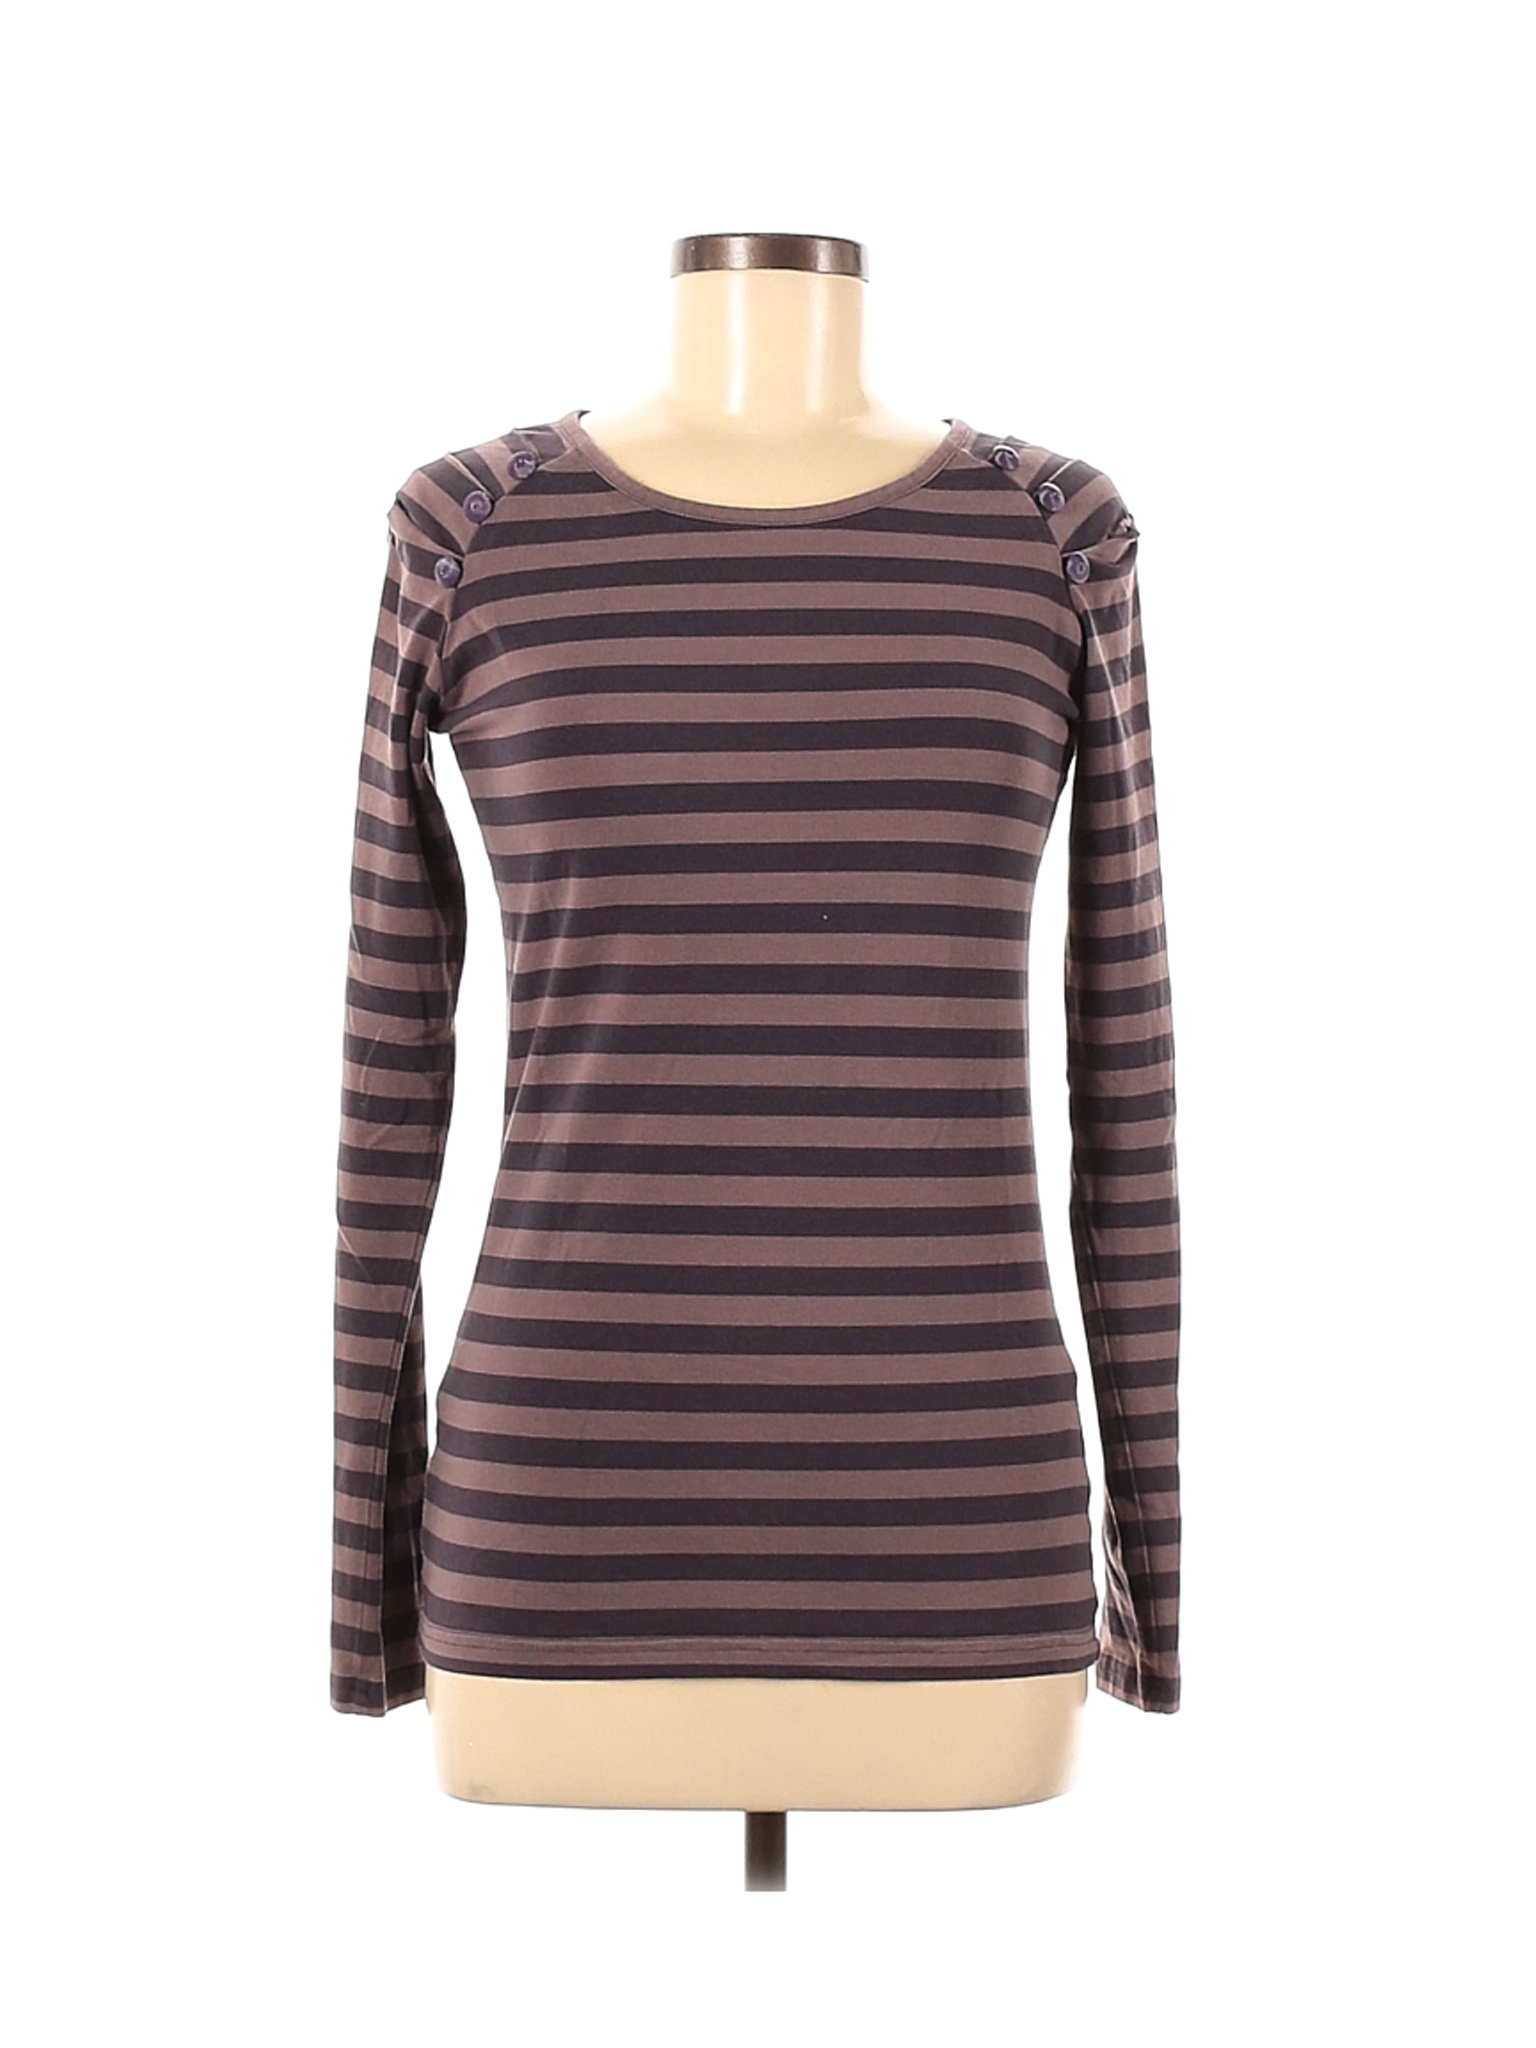 Matilda Jane Women Brown Long Sleeve T-Shirt M | eBay